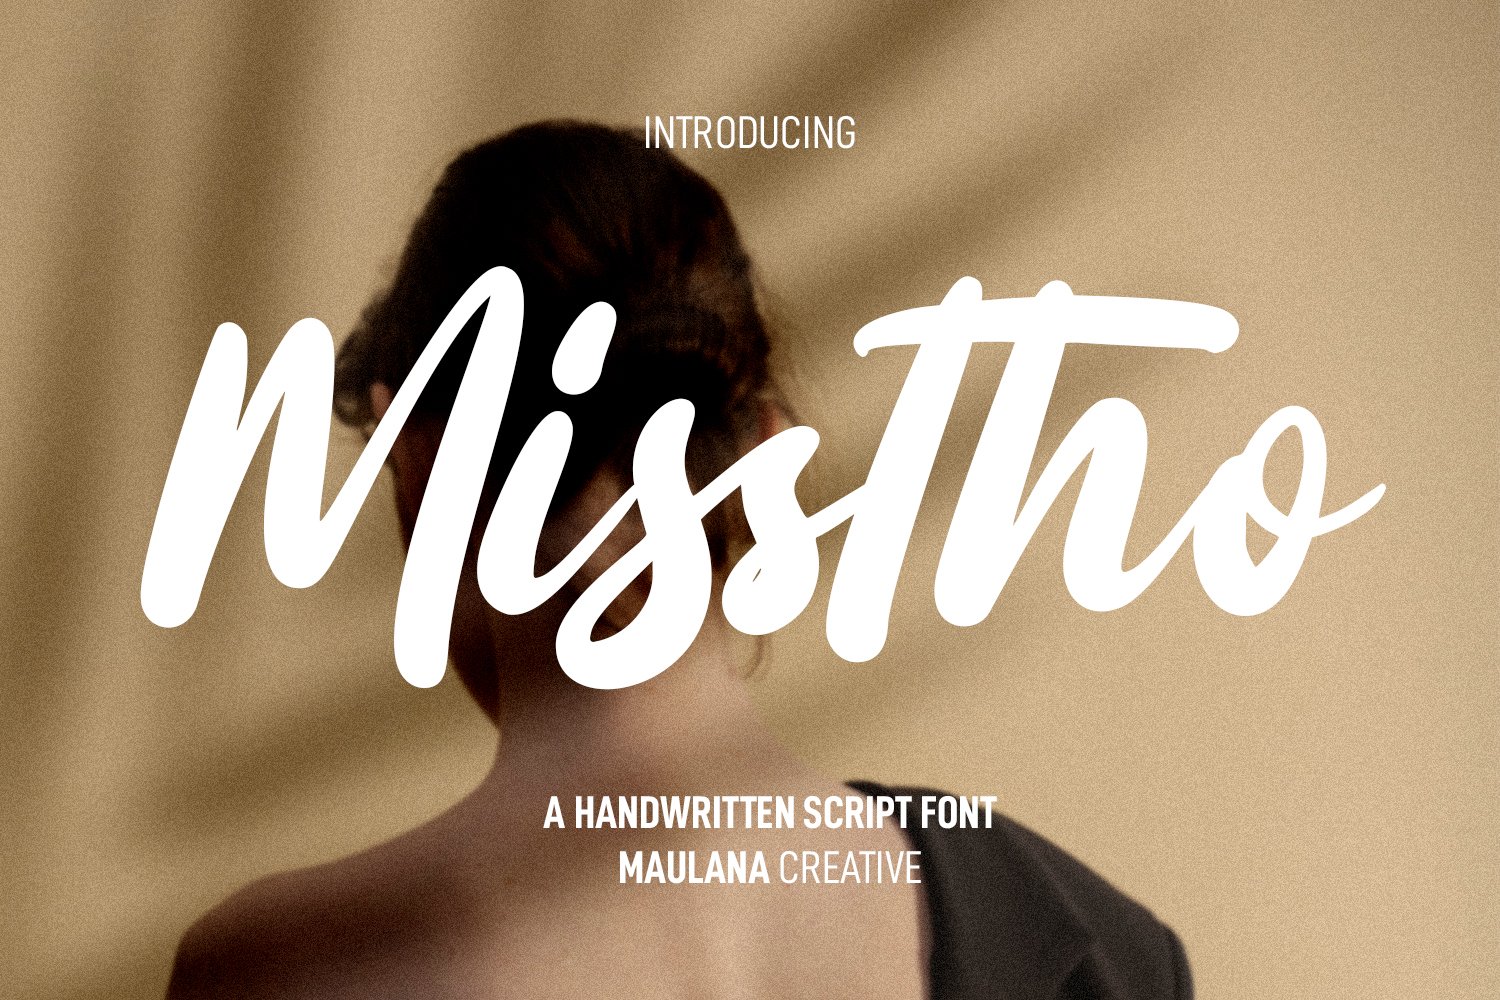 Misstho Script Font cover image.